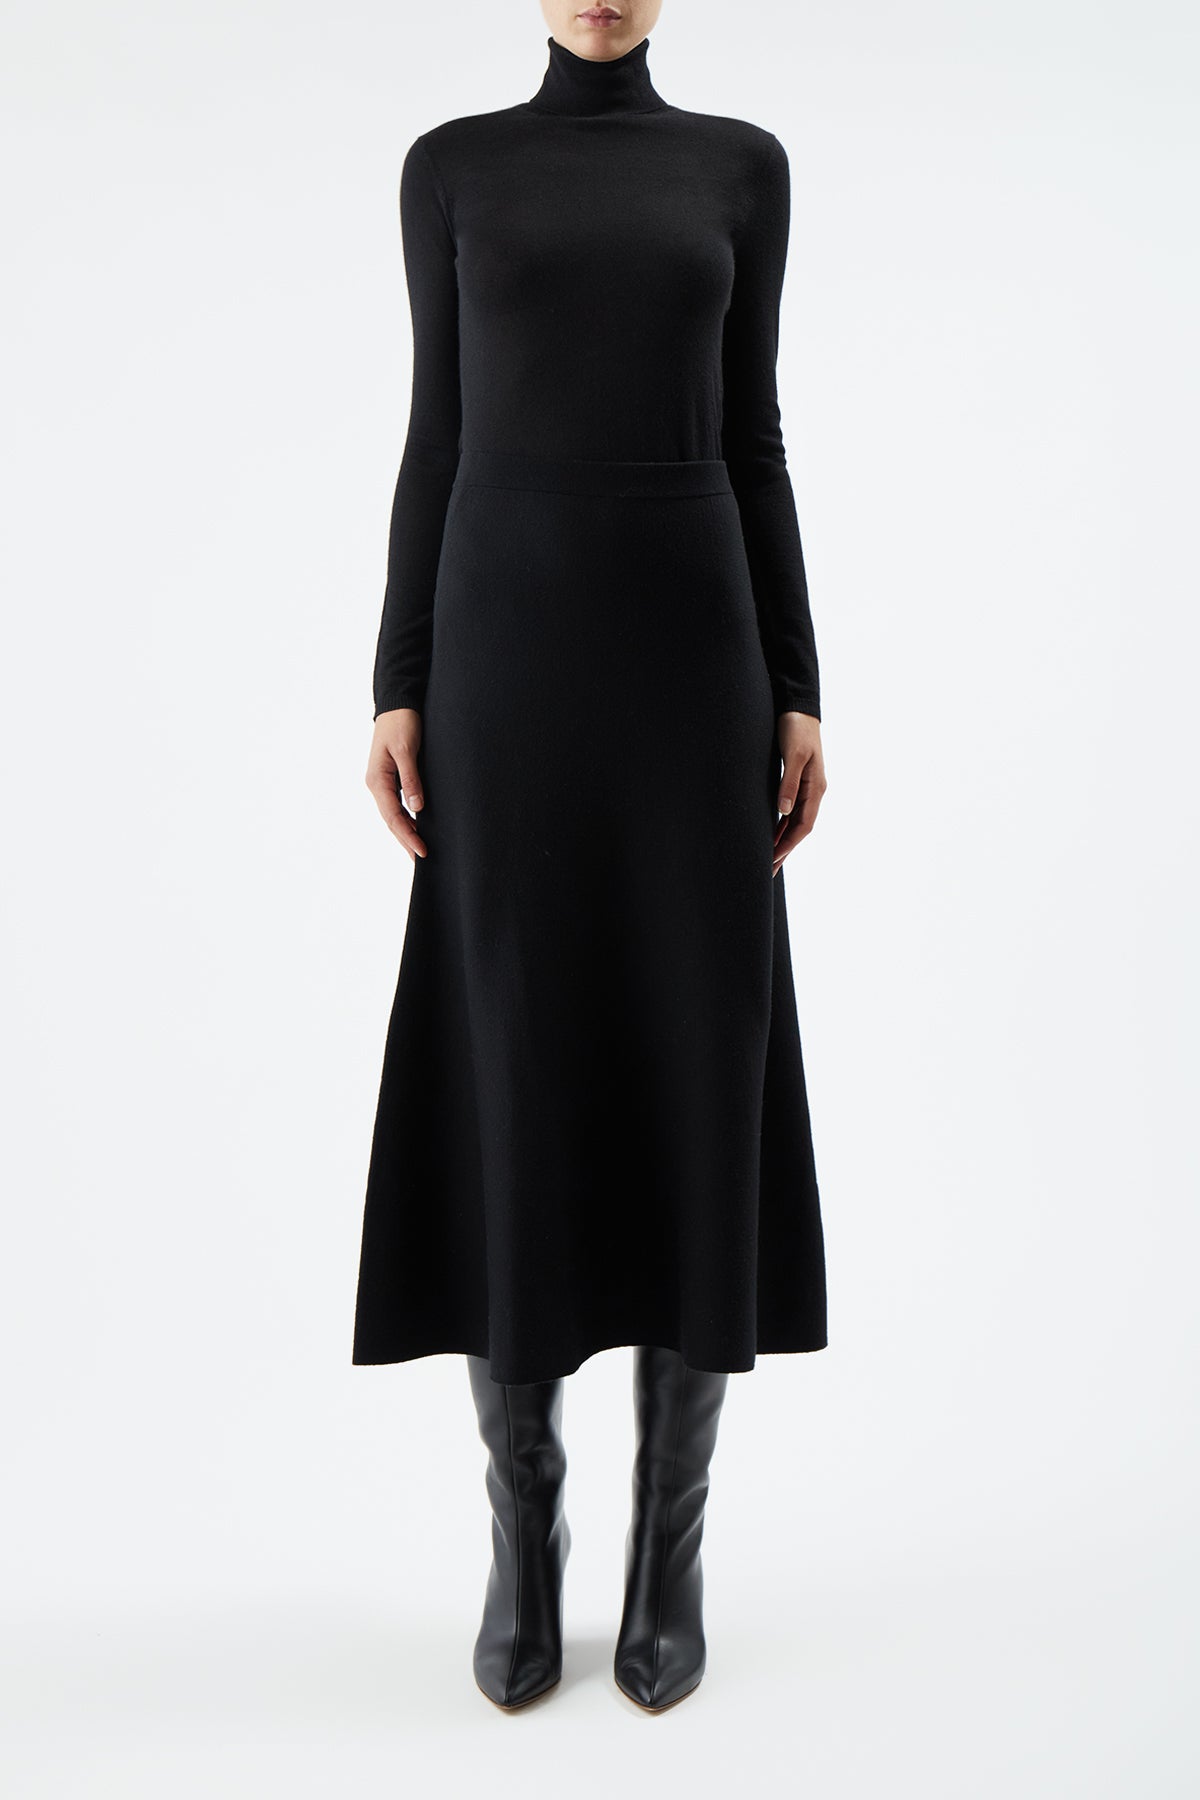 Freddie Knit Skirt in Black Cashmere Wool